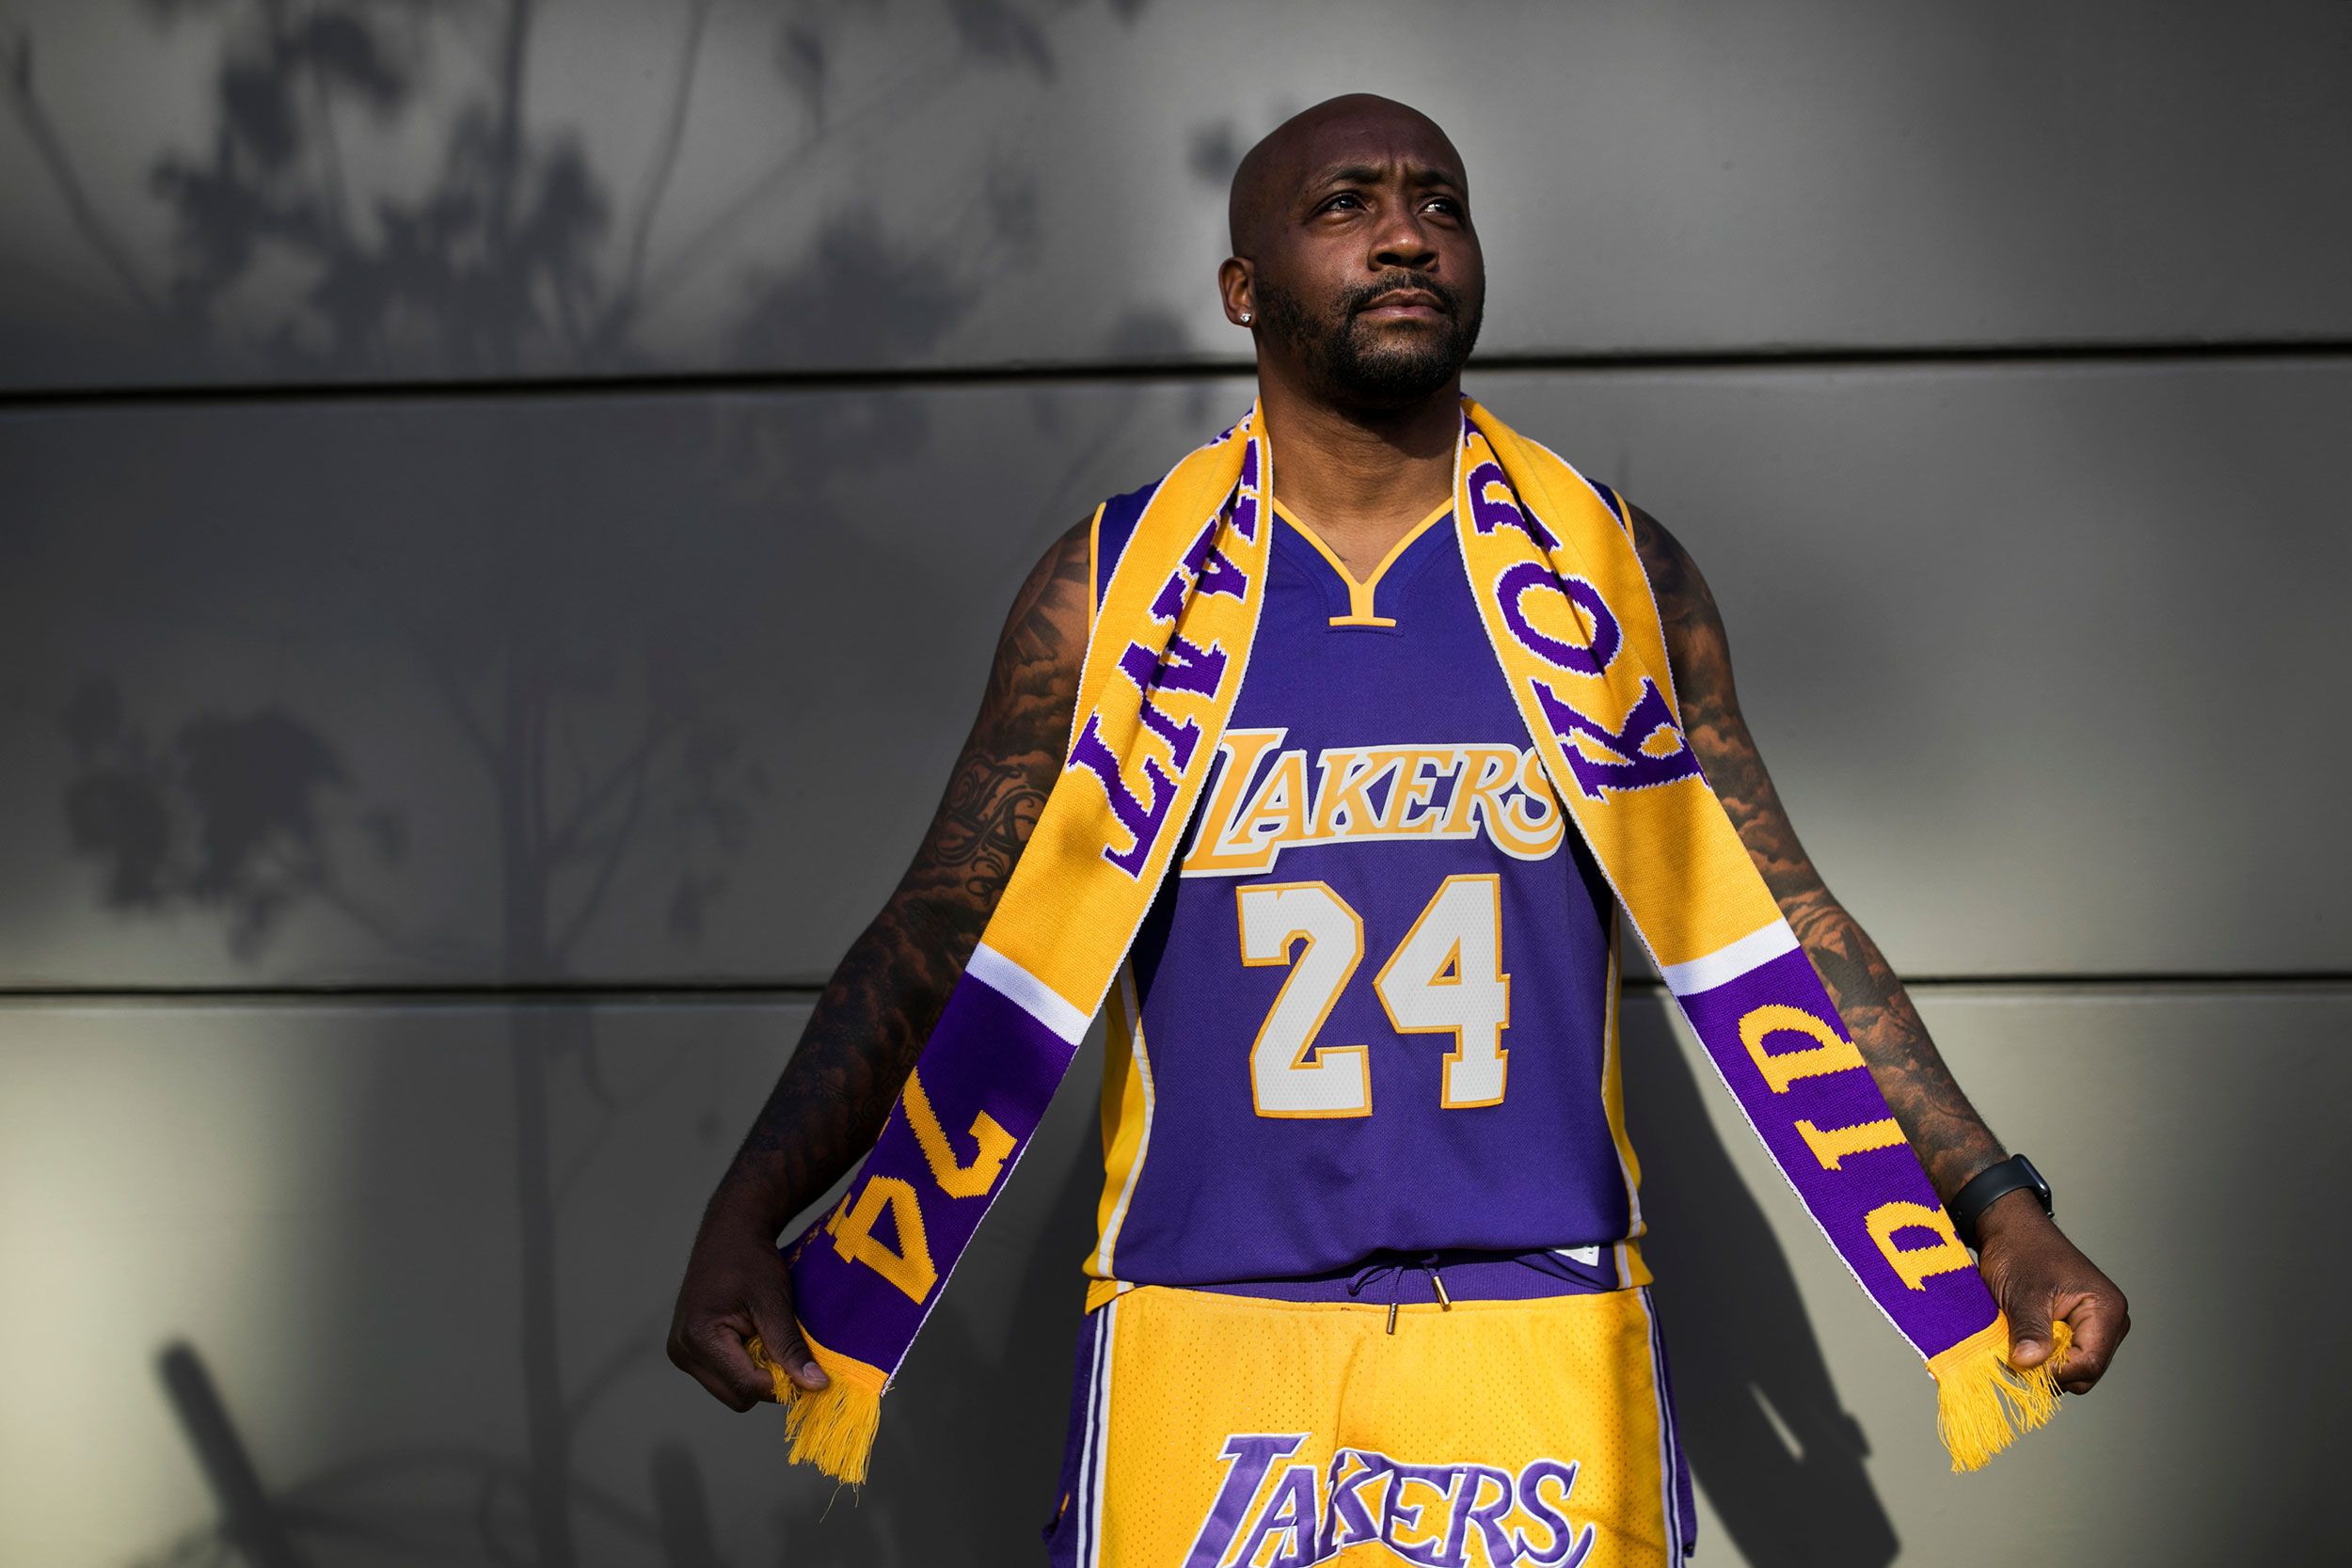 Smithsonian museum honors Kobe Bryant by displaying game-worn